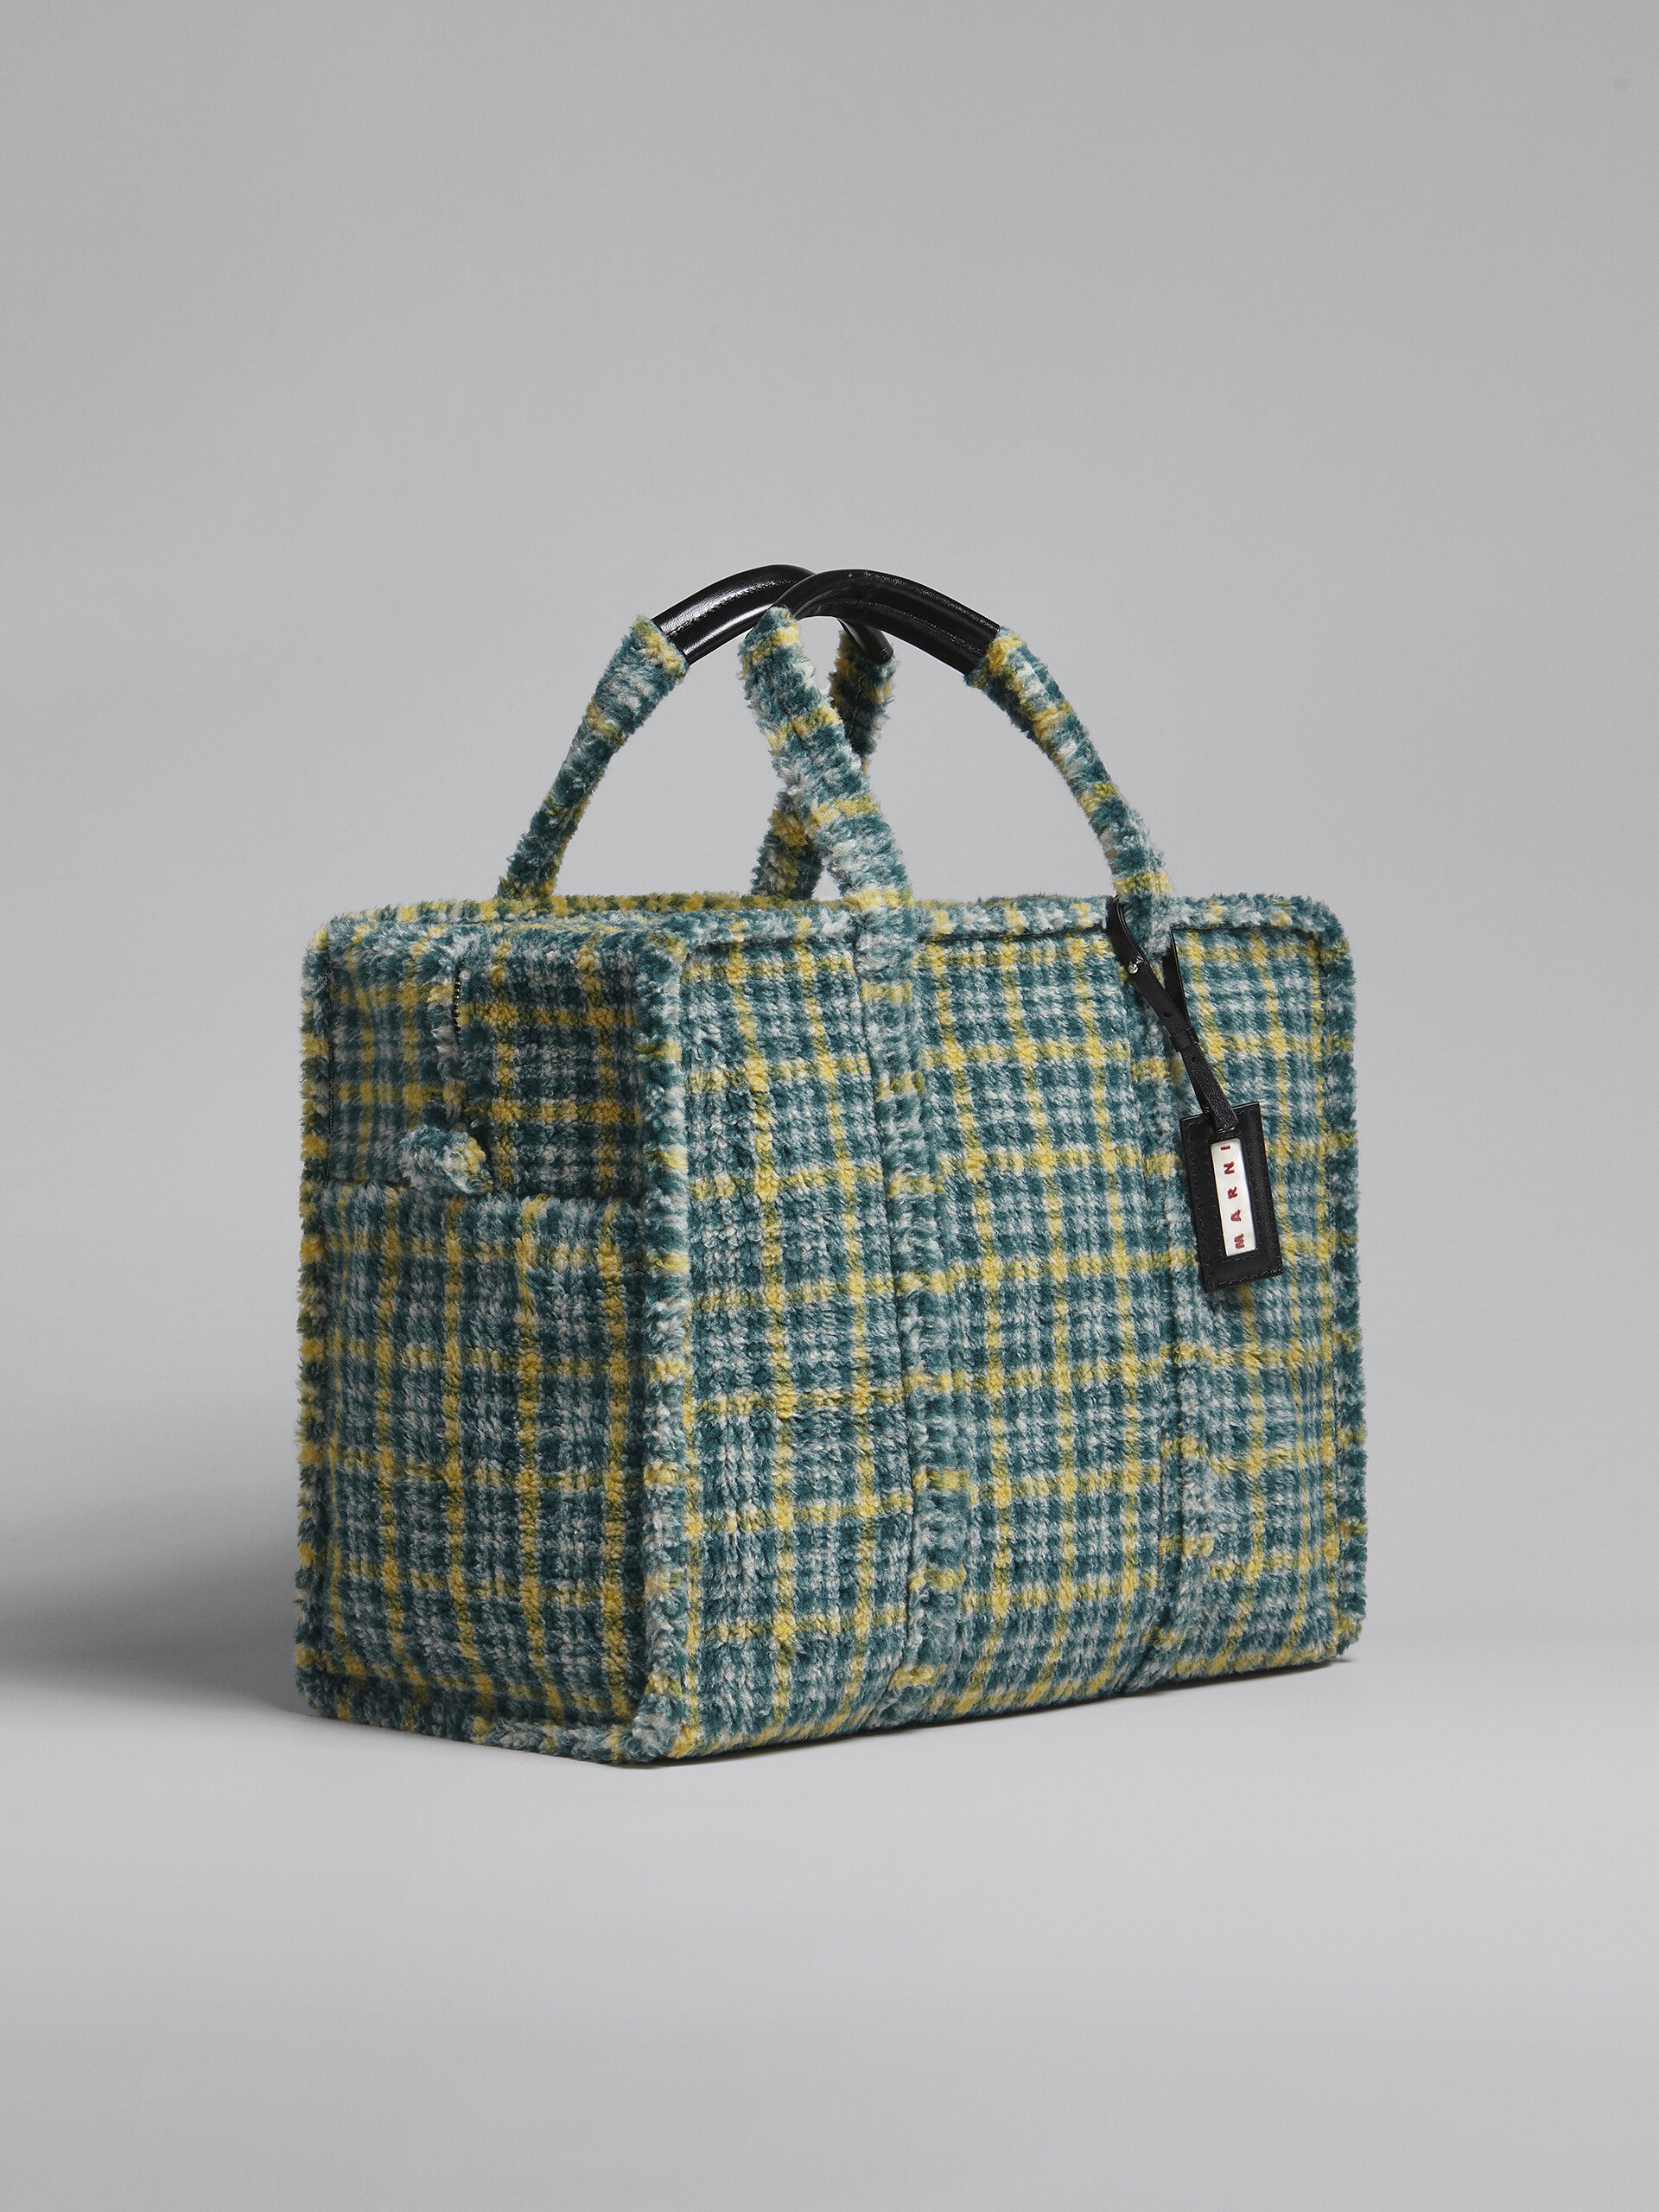 Travel bag in tessuto con motivo a riquadri verde - Borse shopping - Image 6